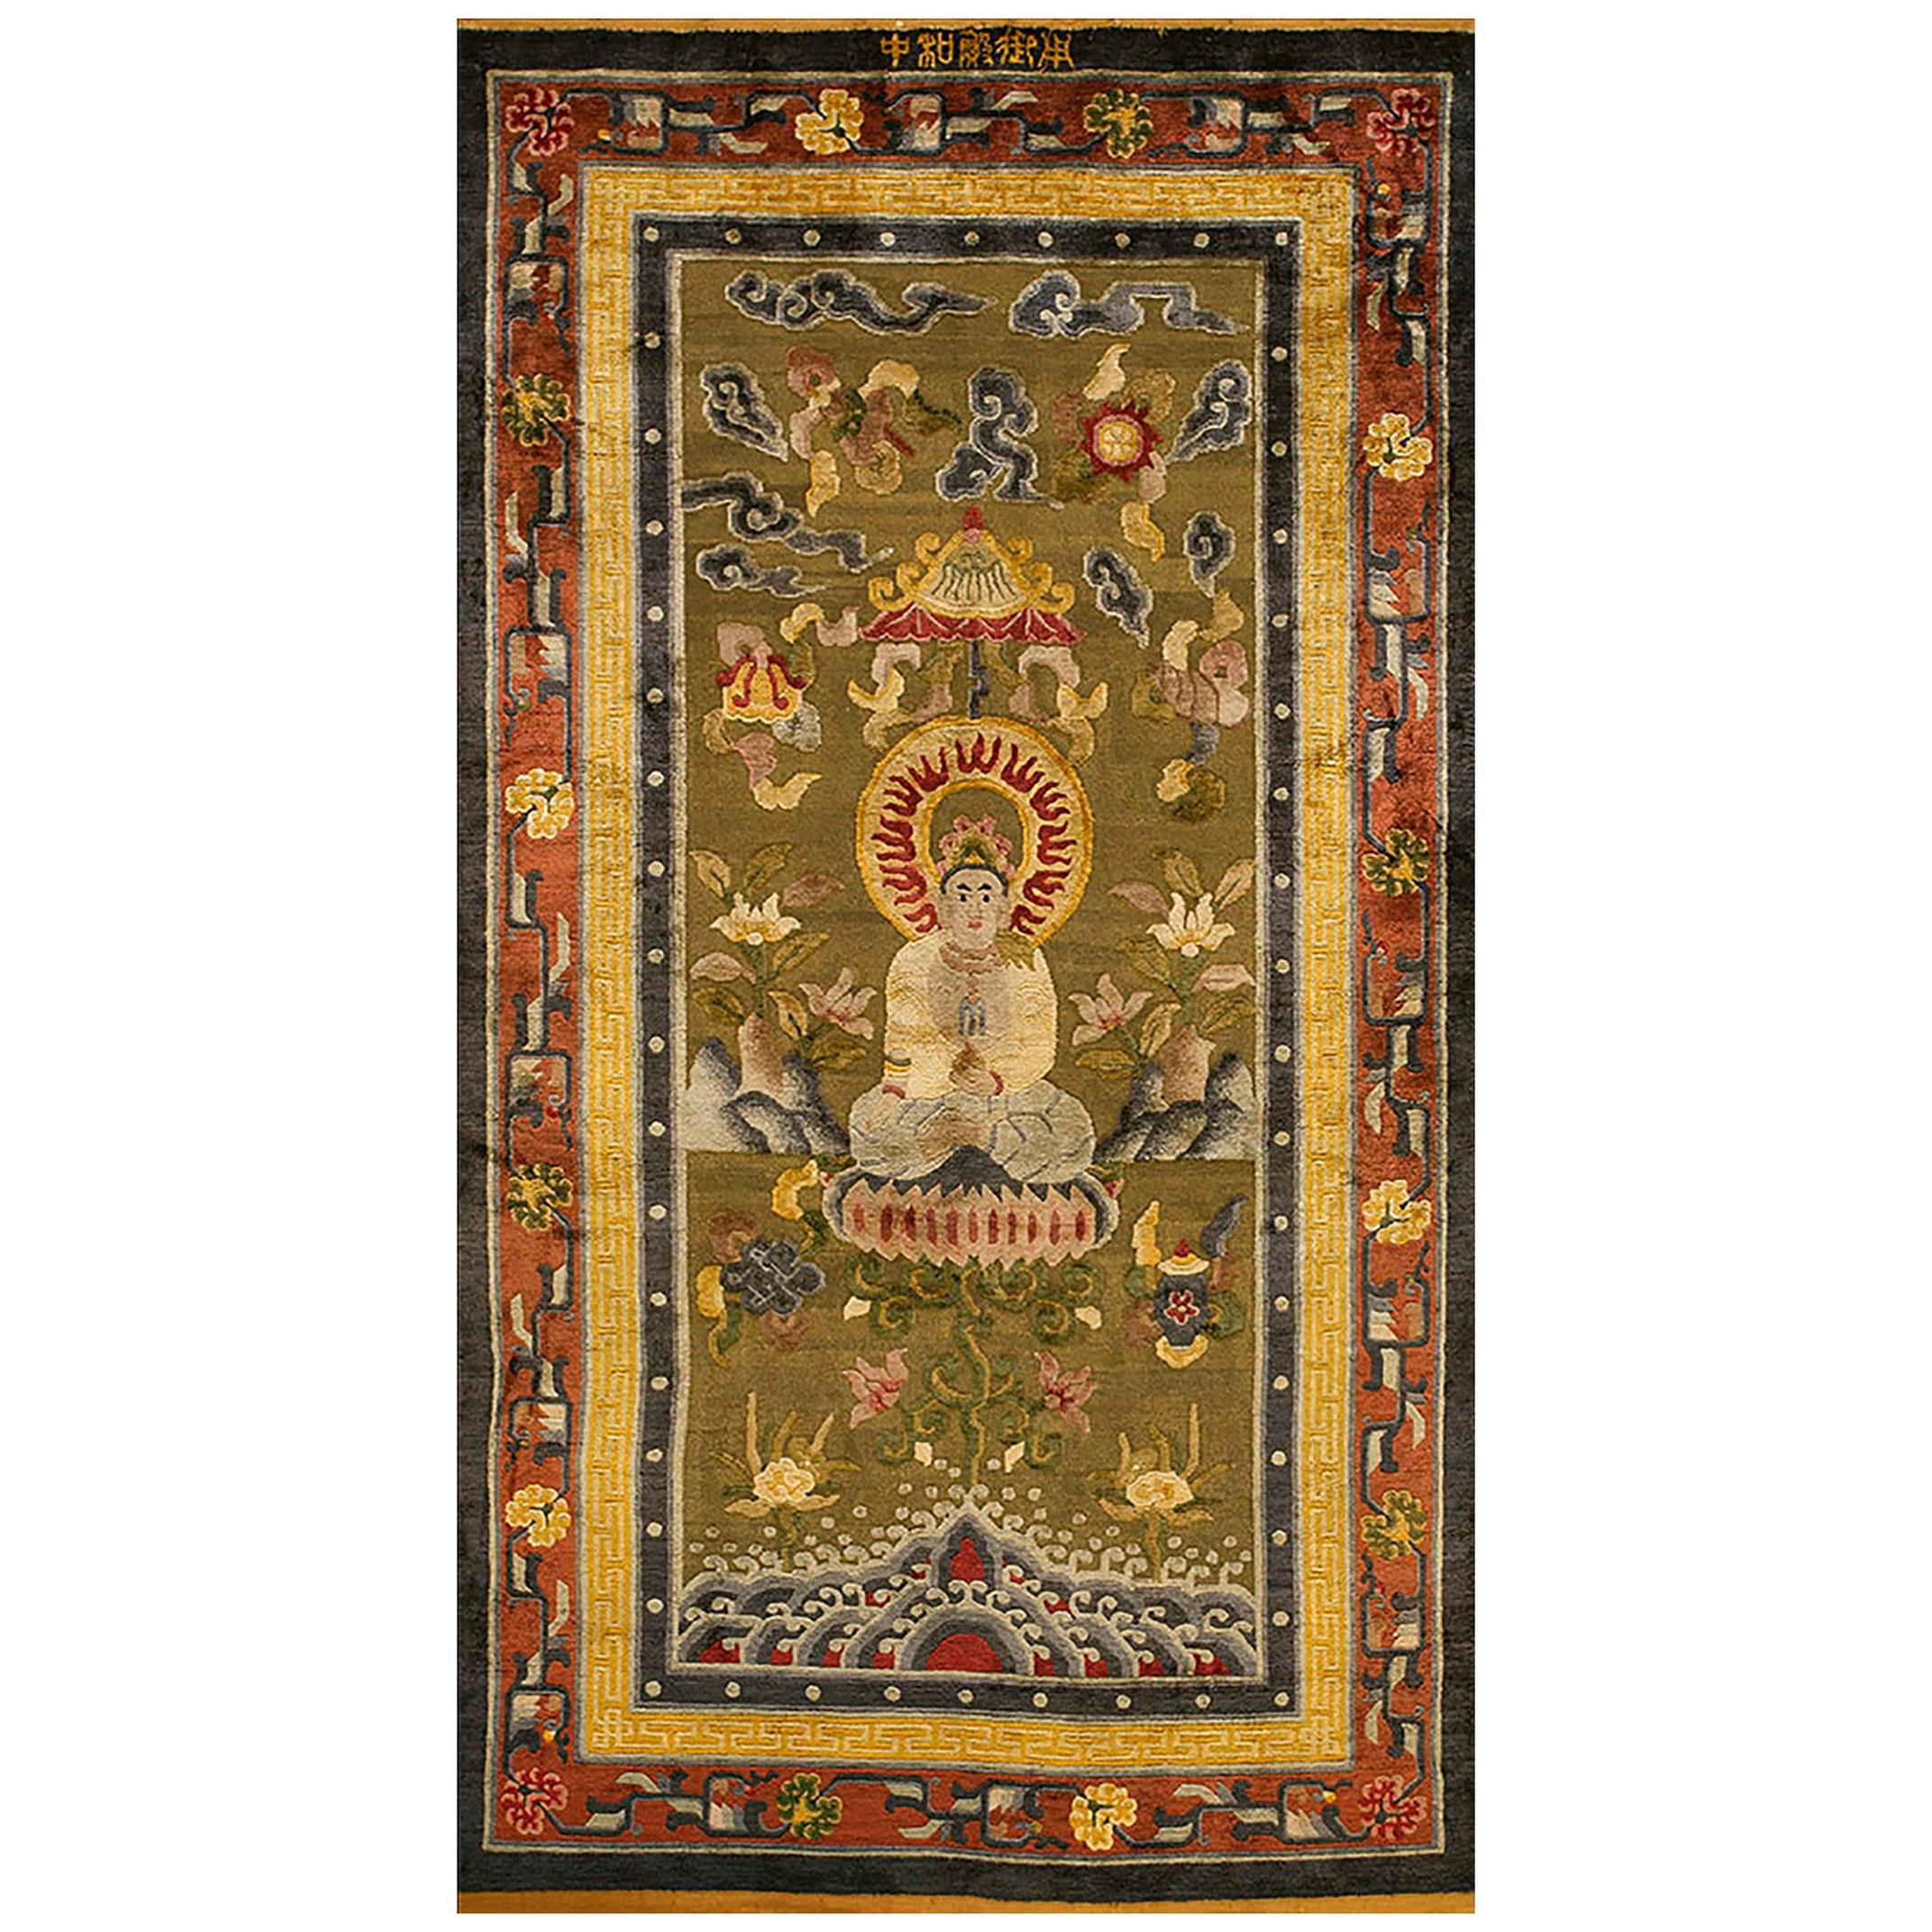 19th Century Chinese Silk & Metallic Thread Meditation Carpet (4'x7'-122x213)